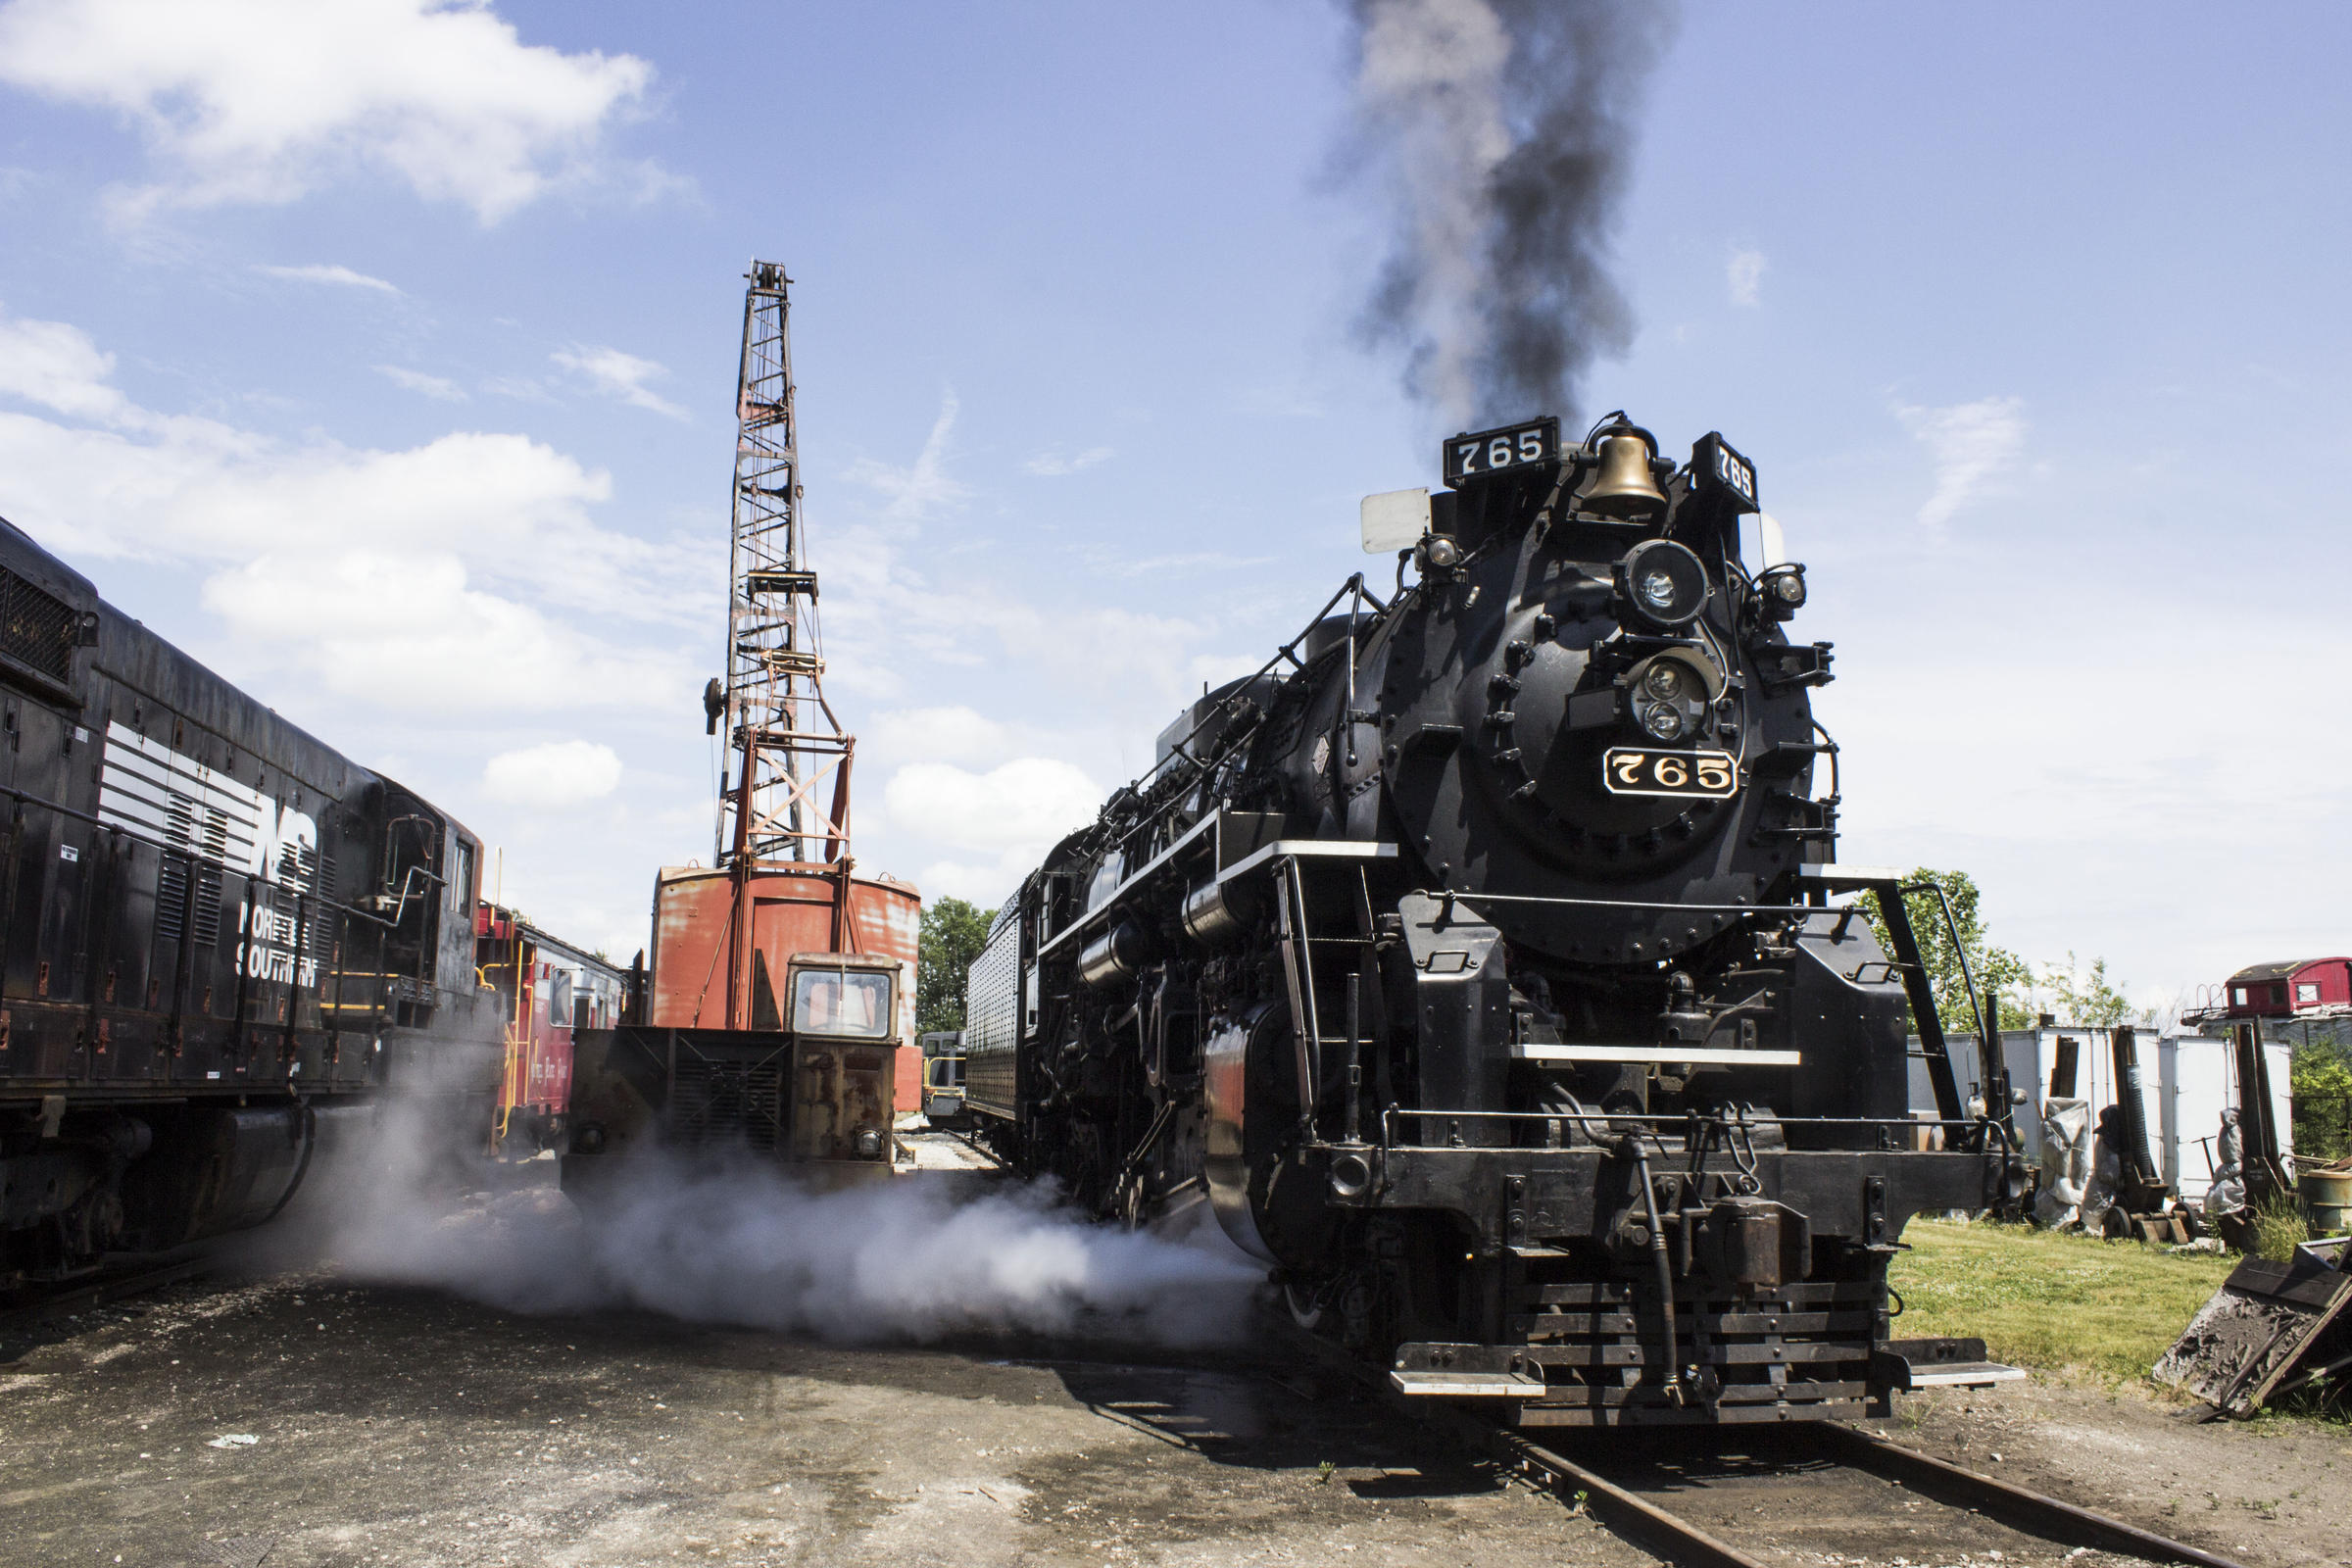 Fort Wayne's Steam Locomotive Travels To Chicago For A Vintage ...